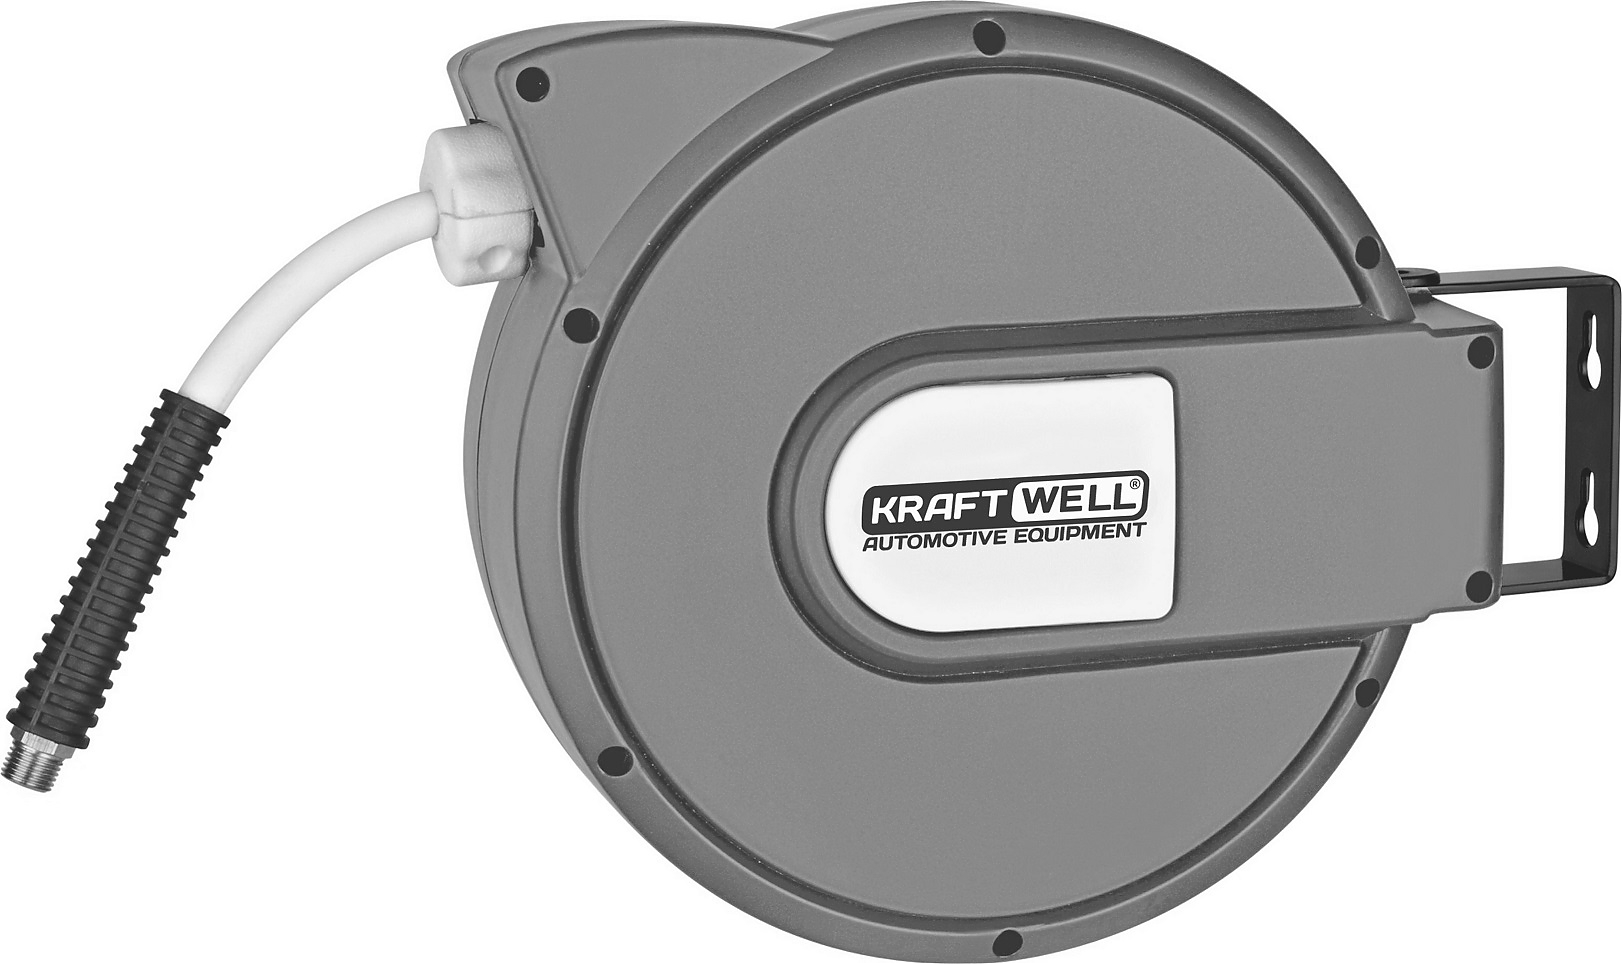 KRW1731.C8 Катушка для раздачи воздуха/воды, закрытая пластиковая KraftWell 